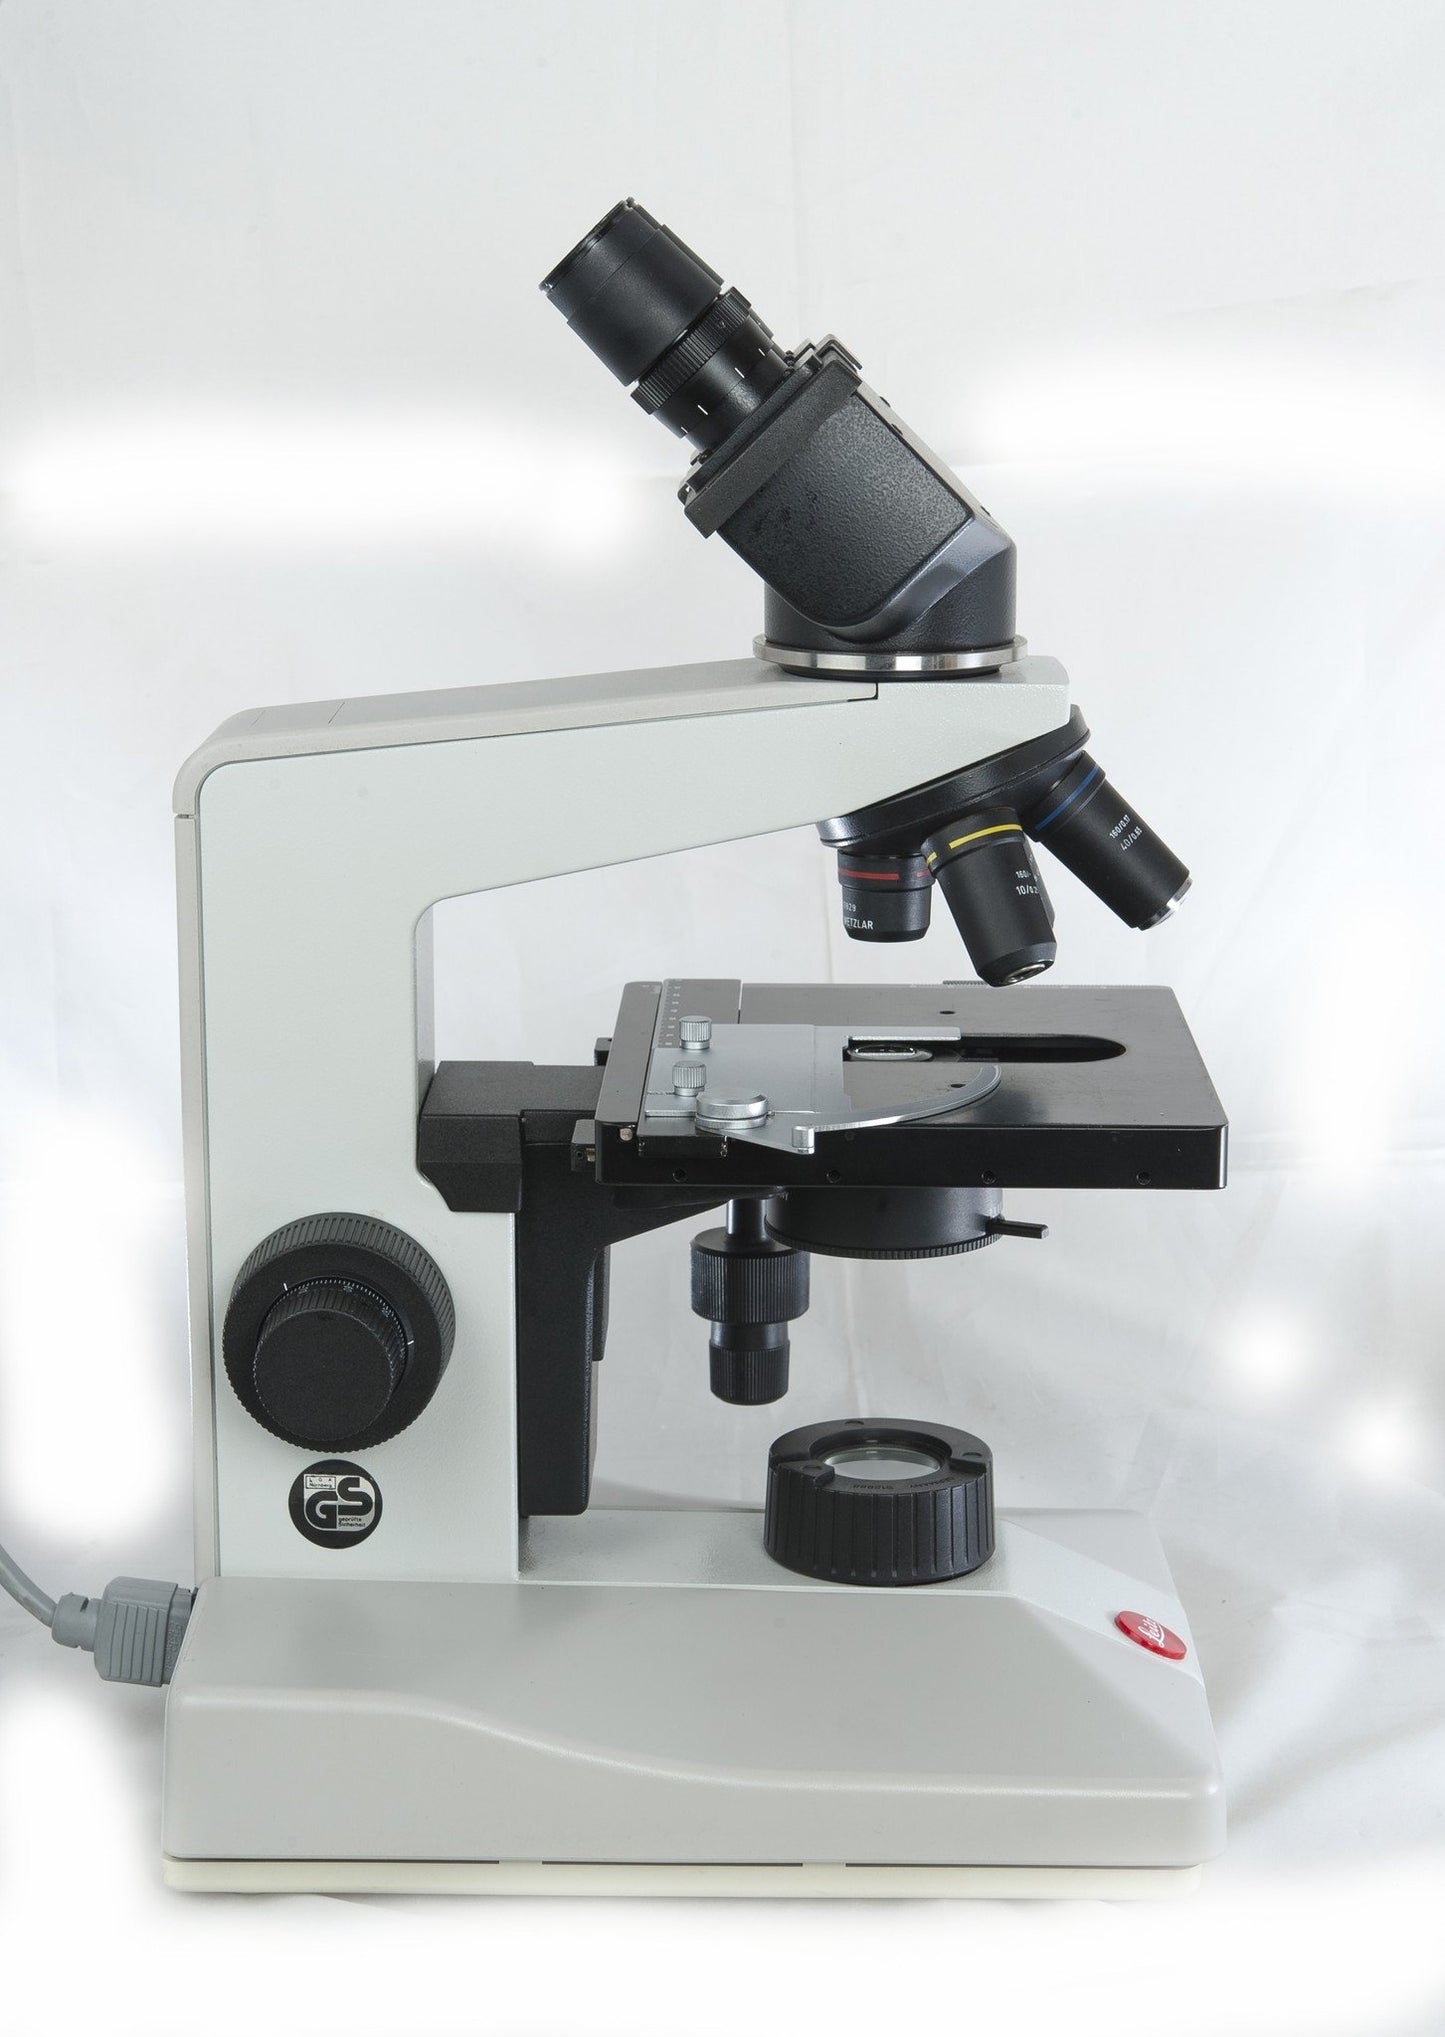 Leitz Microlab Binocular Microscope - Microscope Central
 - 3